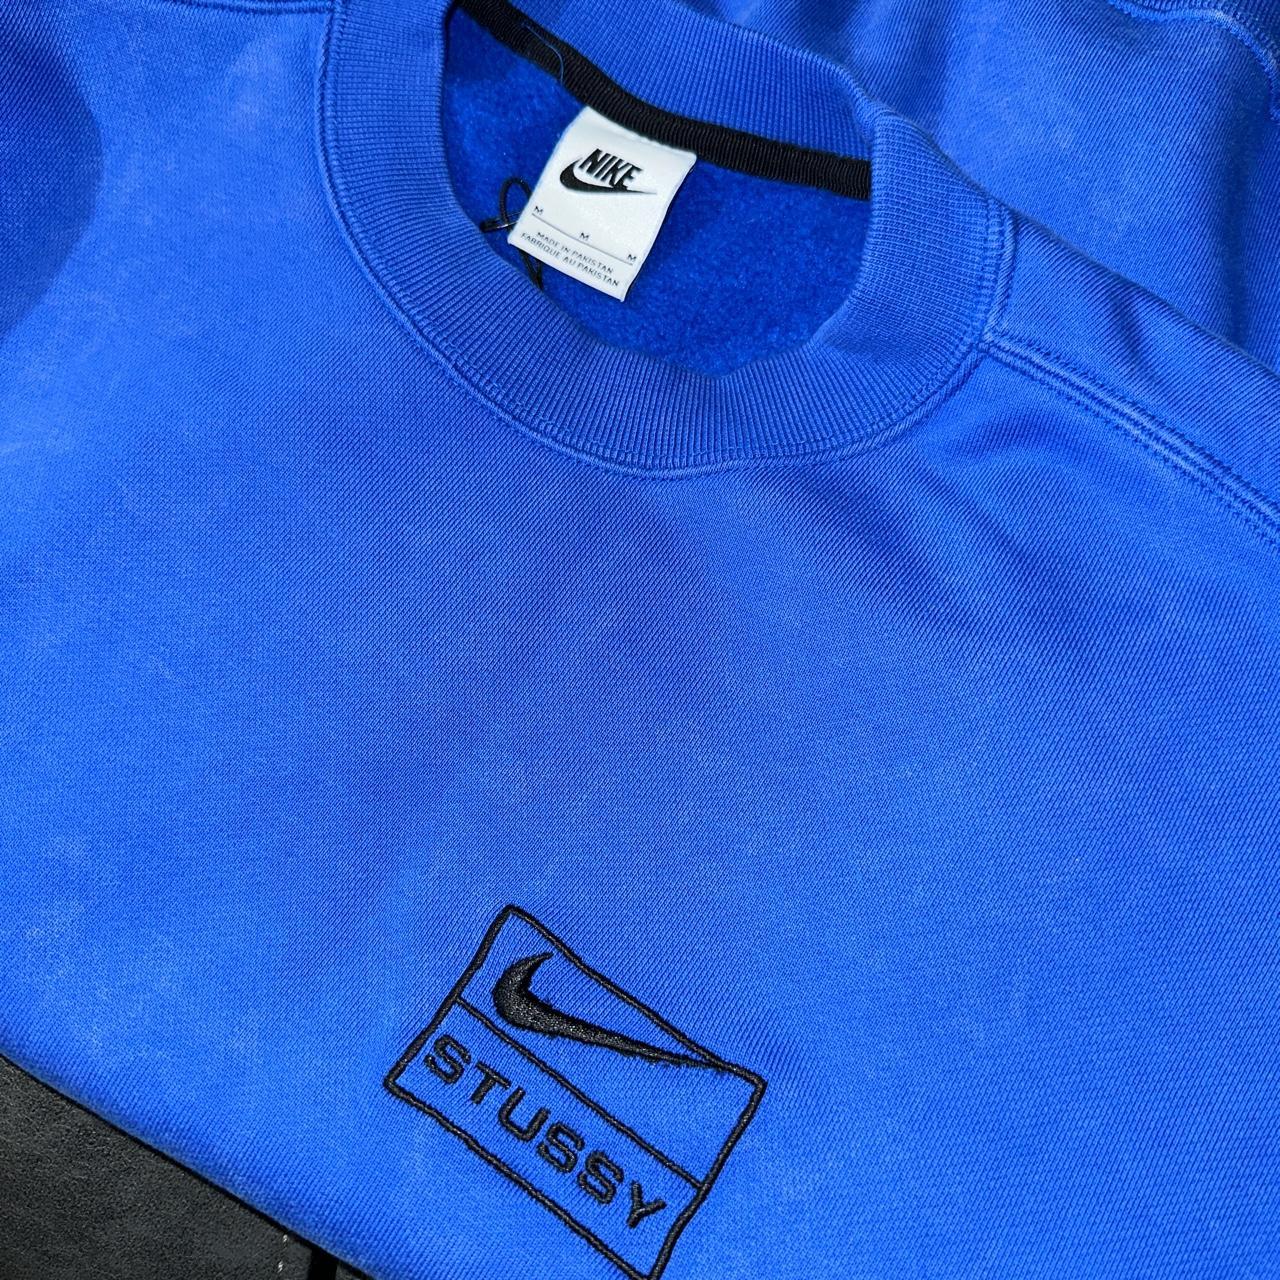 Nike x Stüssy Acid Wash Fleece Crew 'Blue' (Men's... - Depop